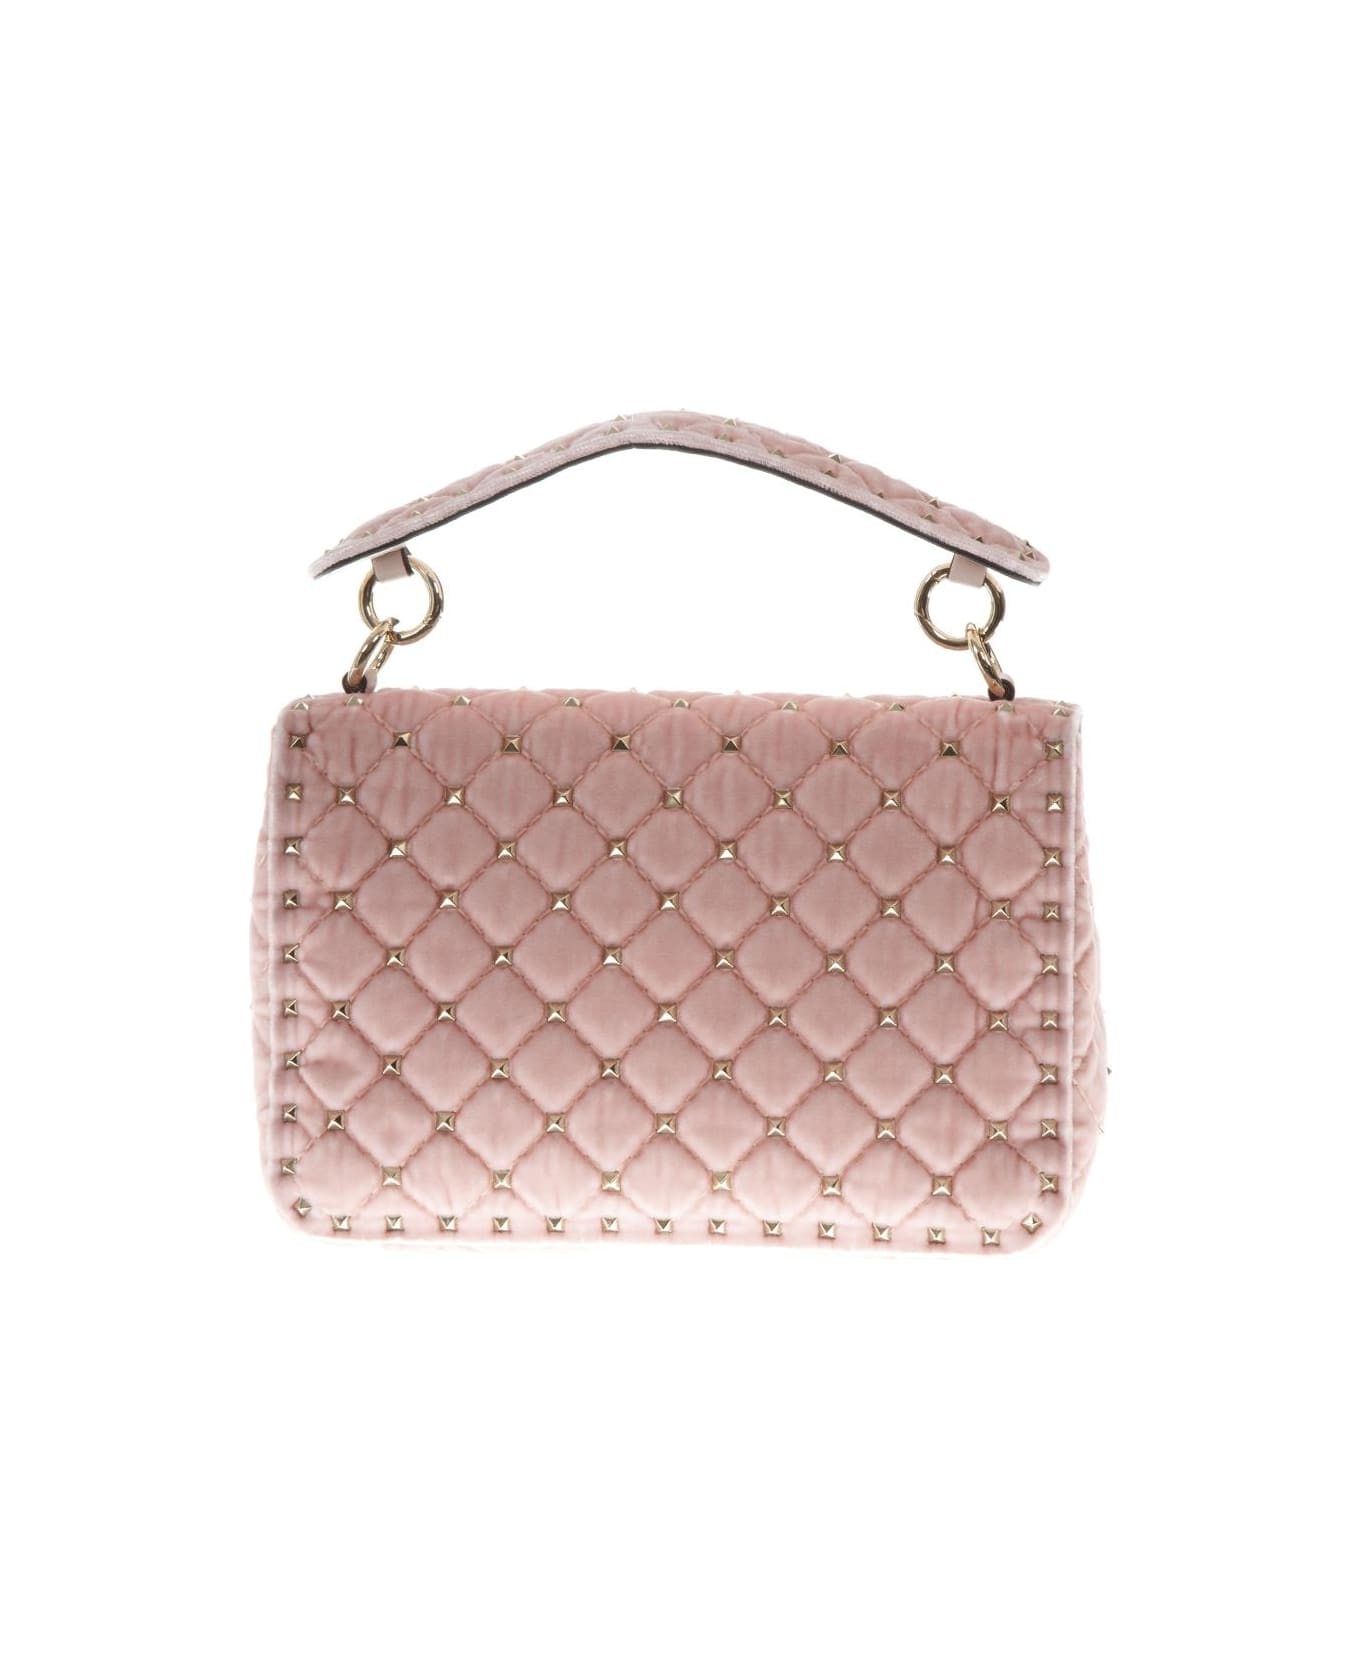 Valentino Garavani Rockstud Spike Chain Pink Leather Bag | italist ...